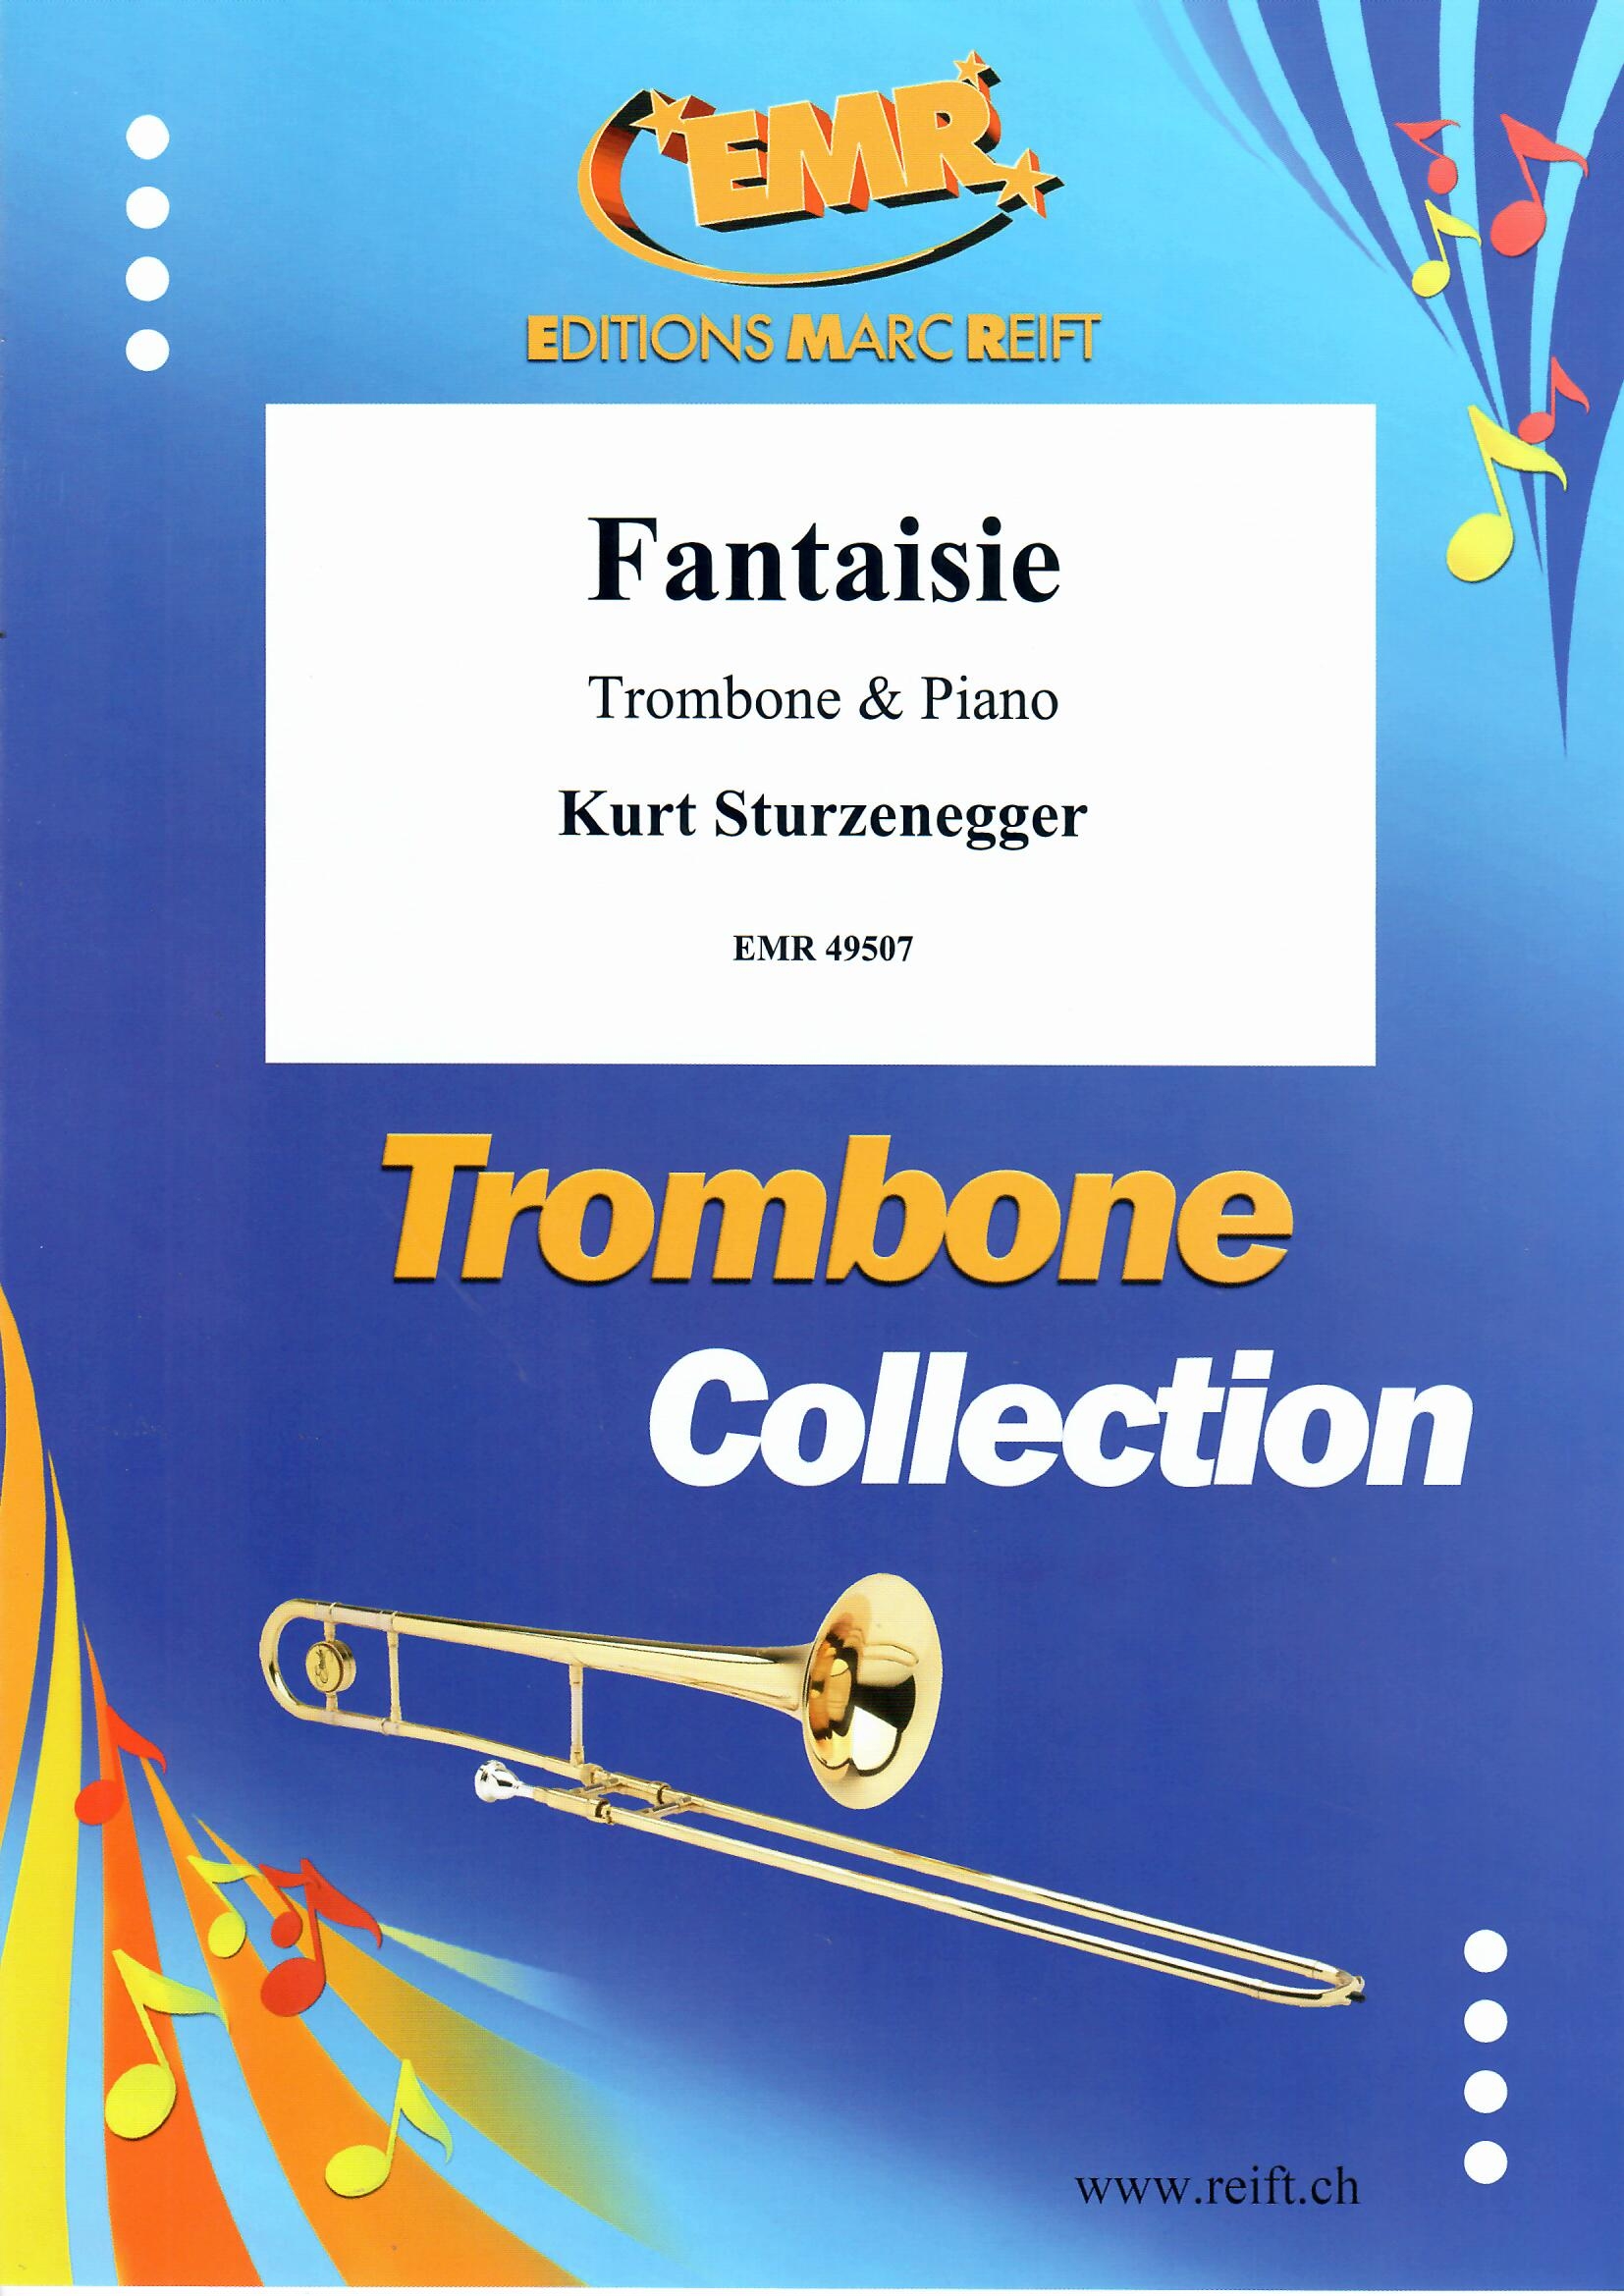 FANTAISIE - Trombone & Piano, SOLOS - Trombone